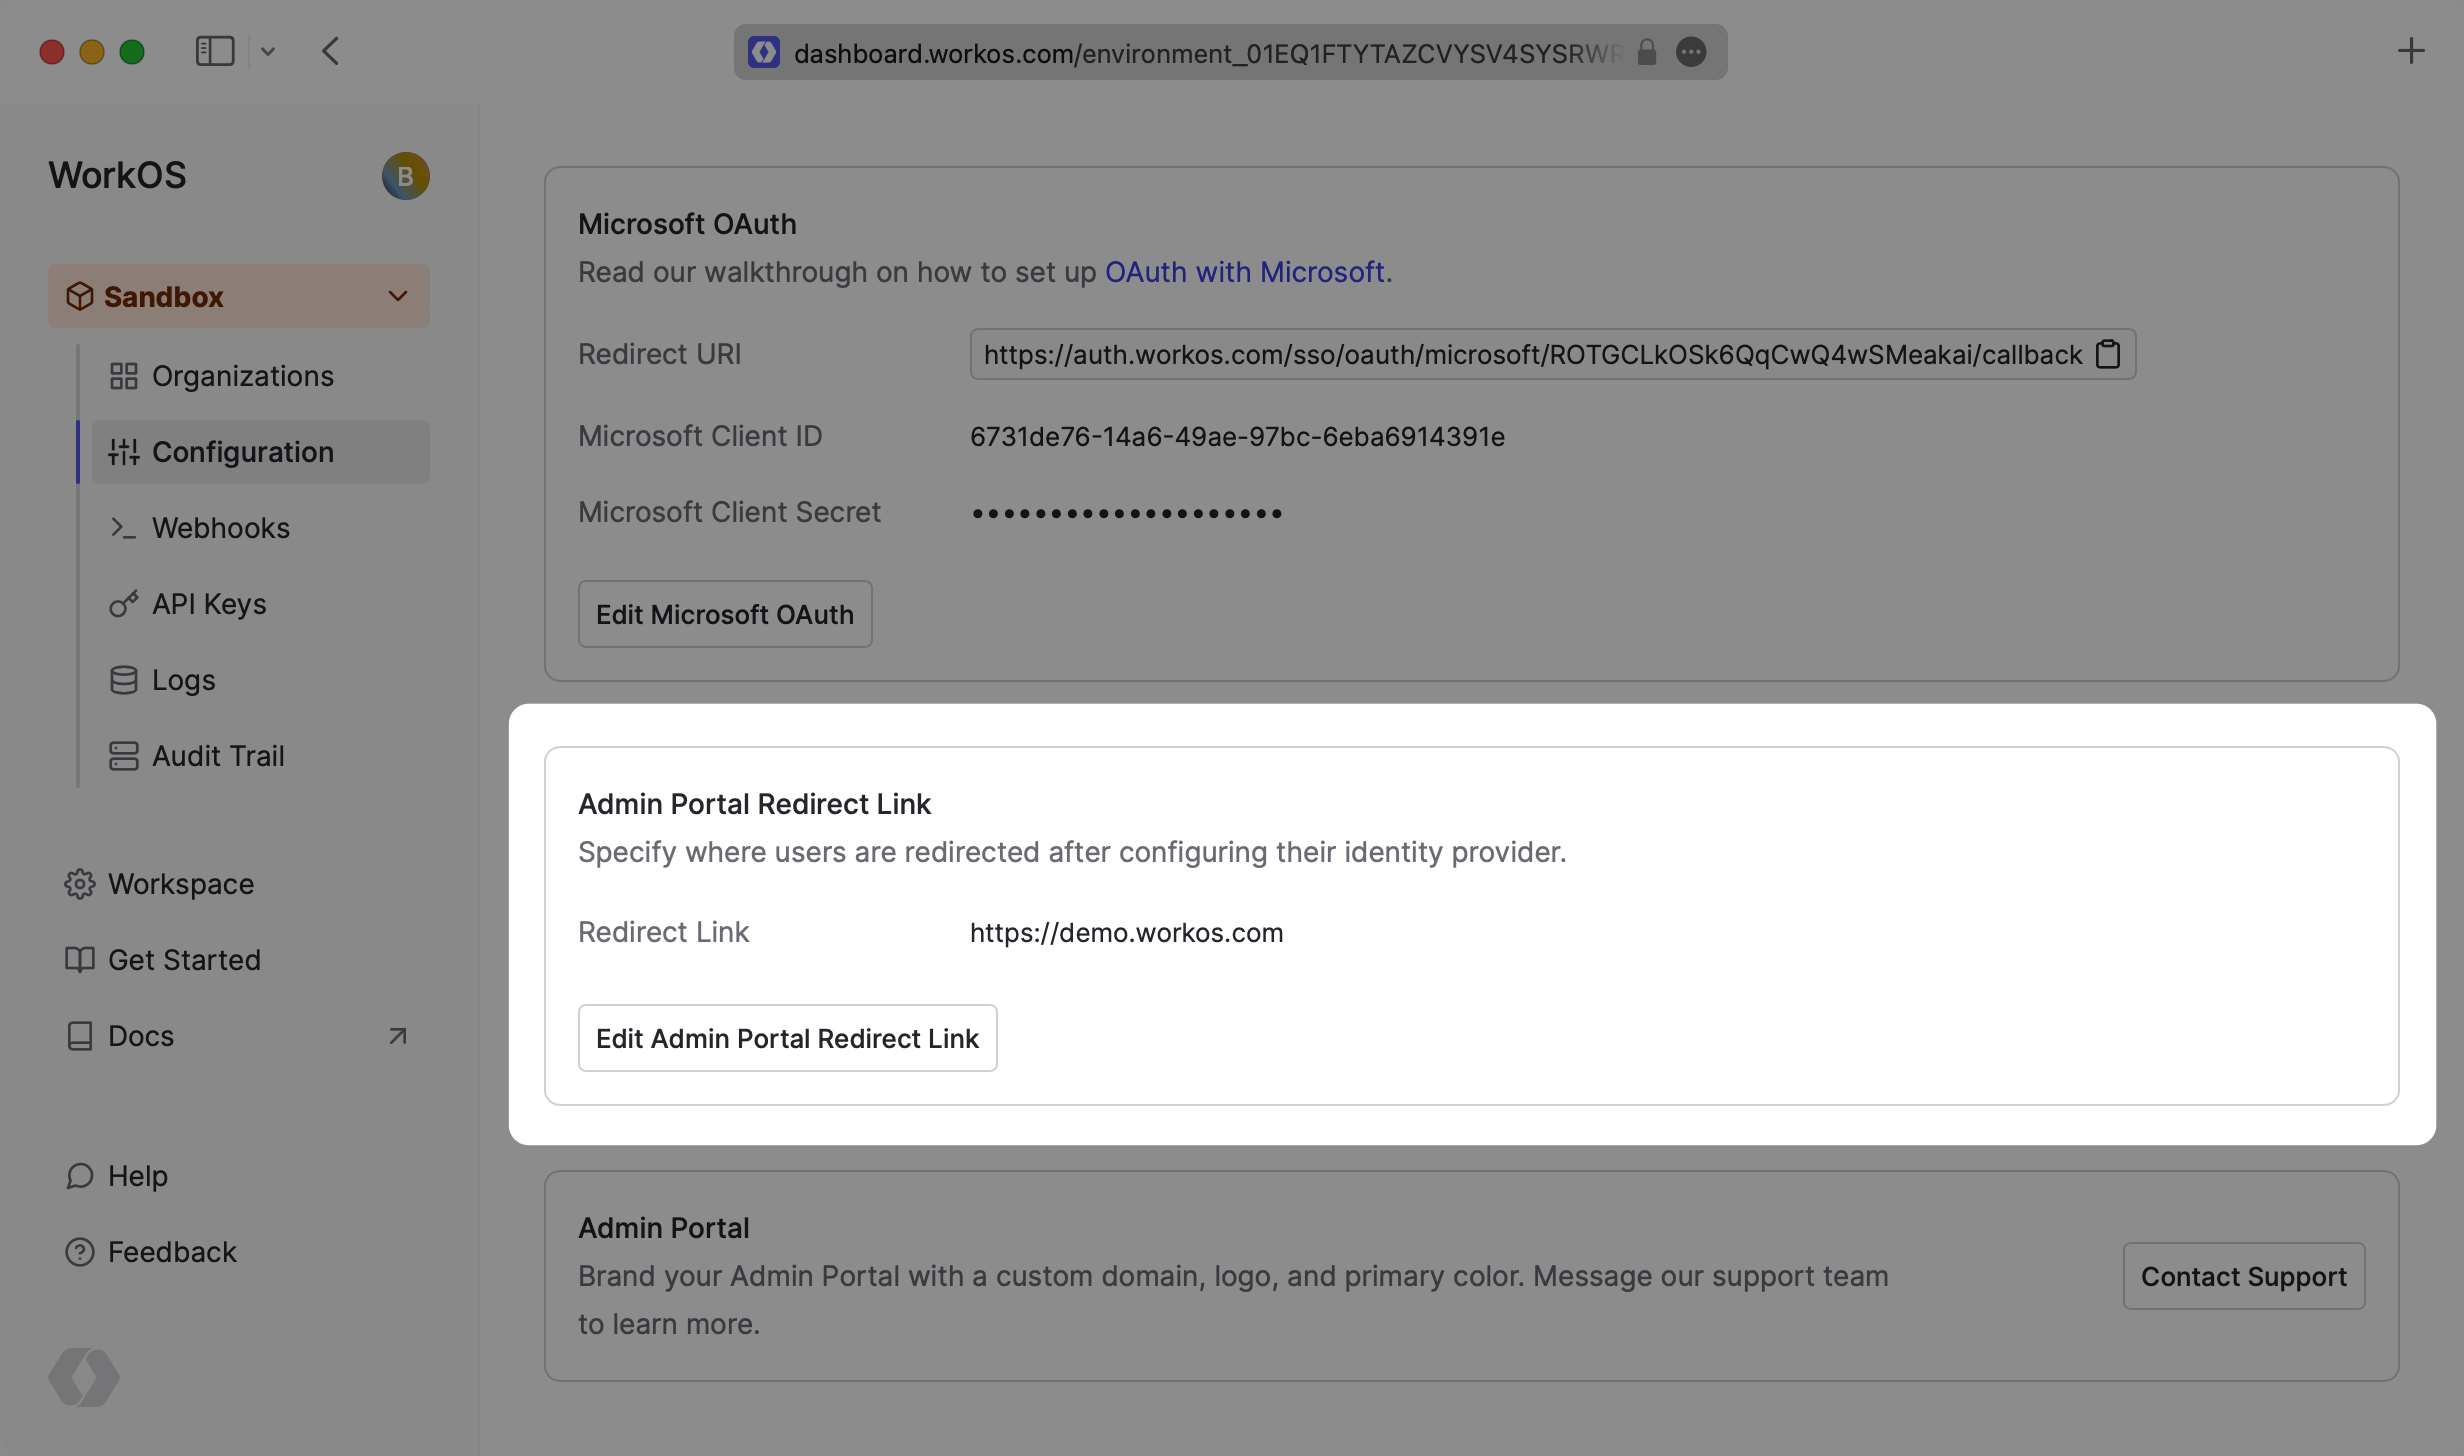 WorkOS Dashboard – Admin Portal Redirect Link